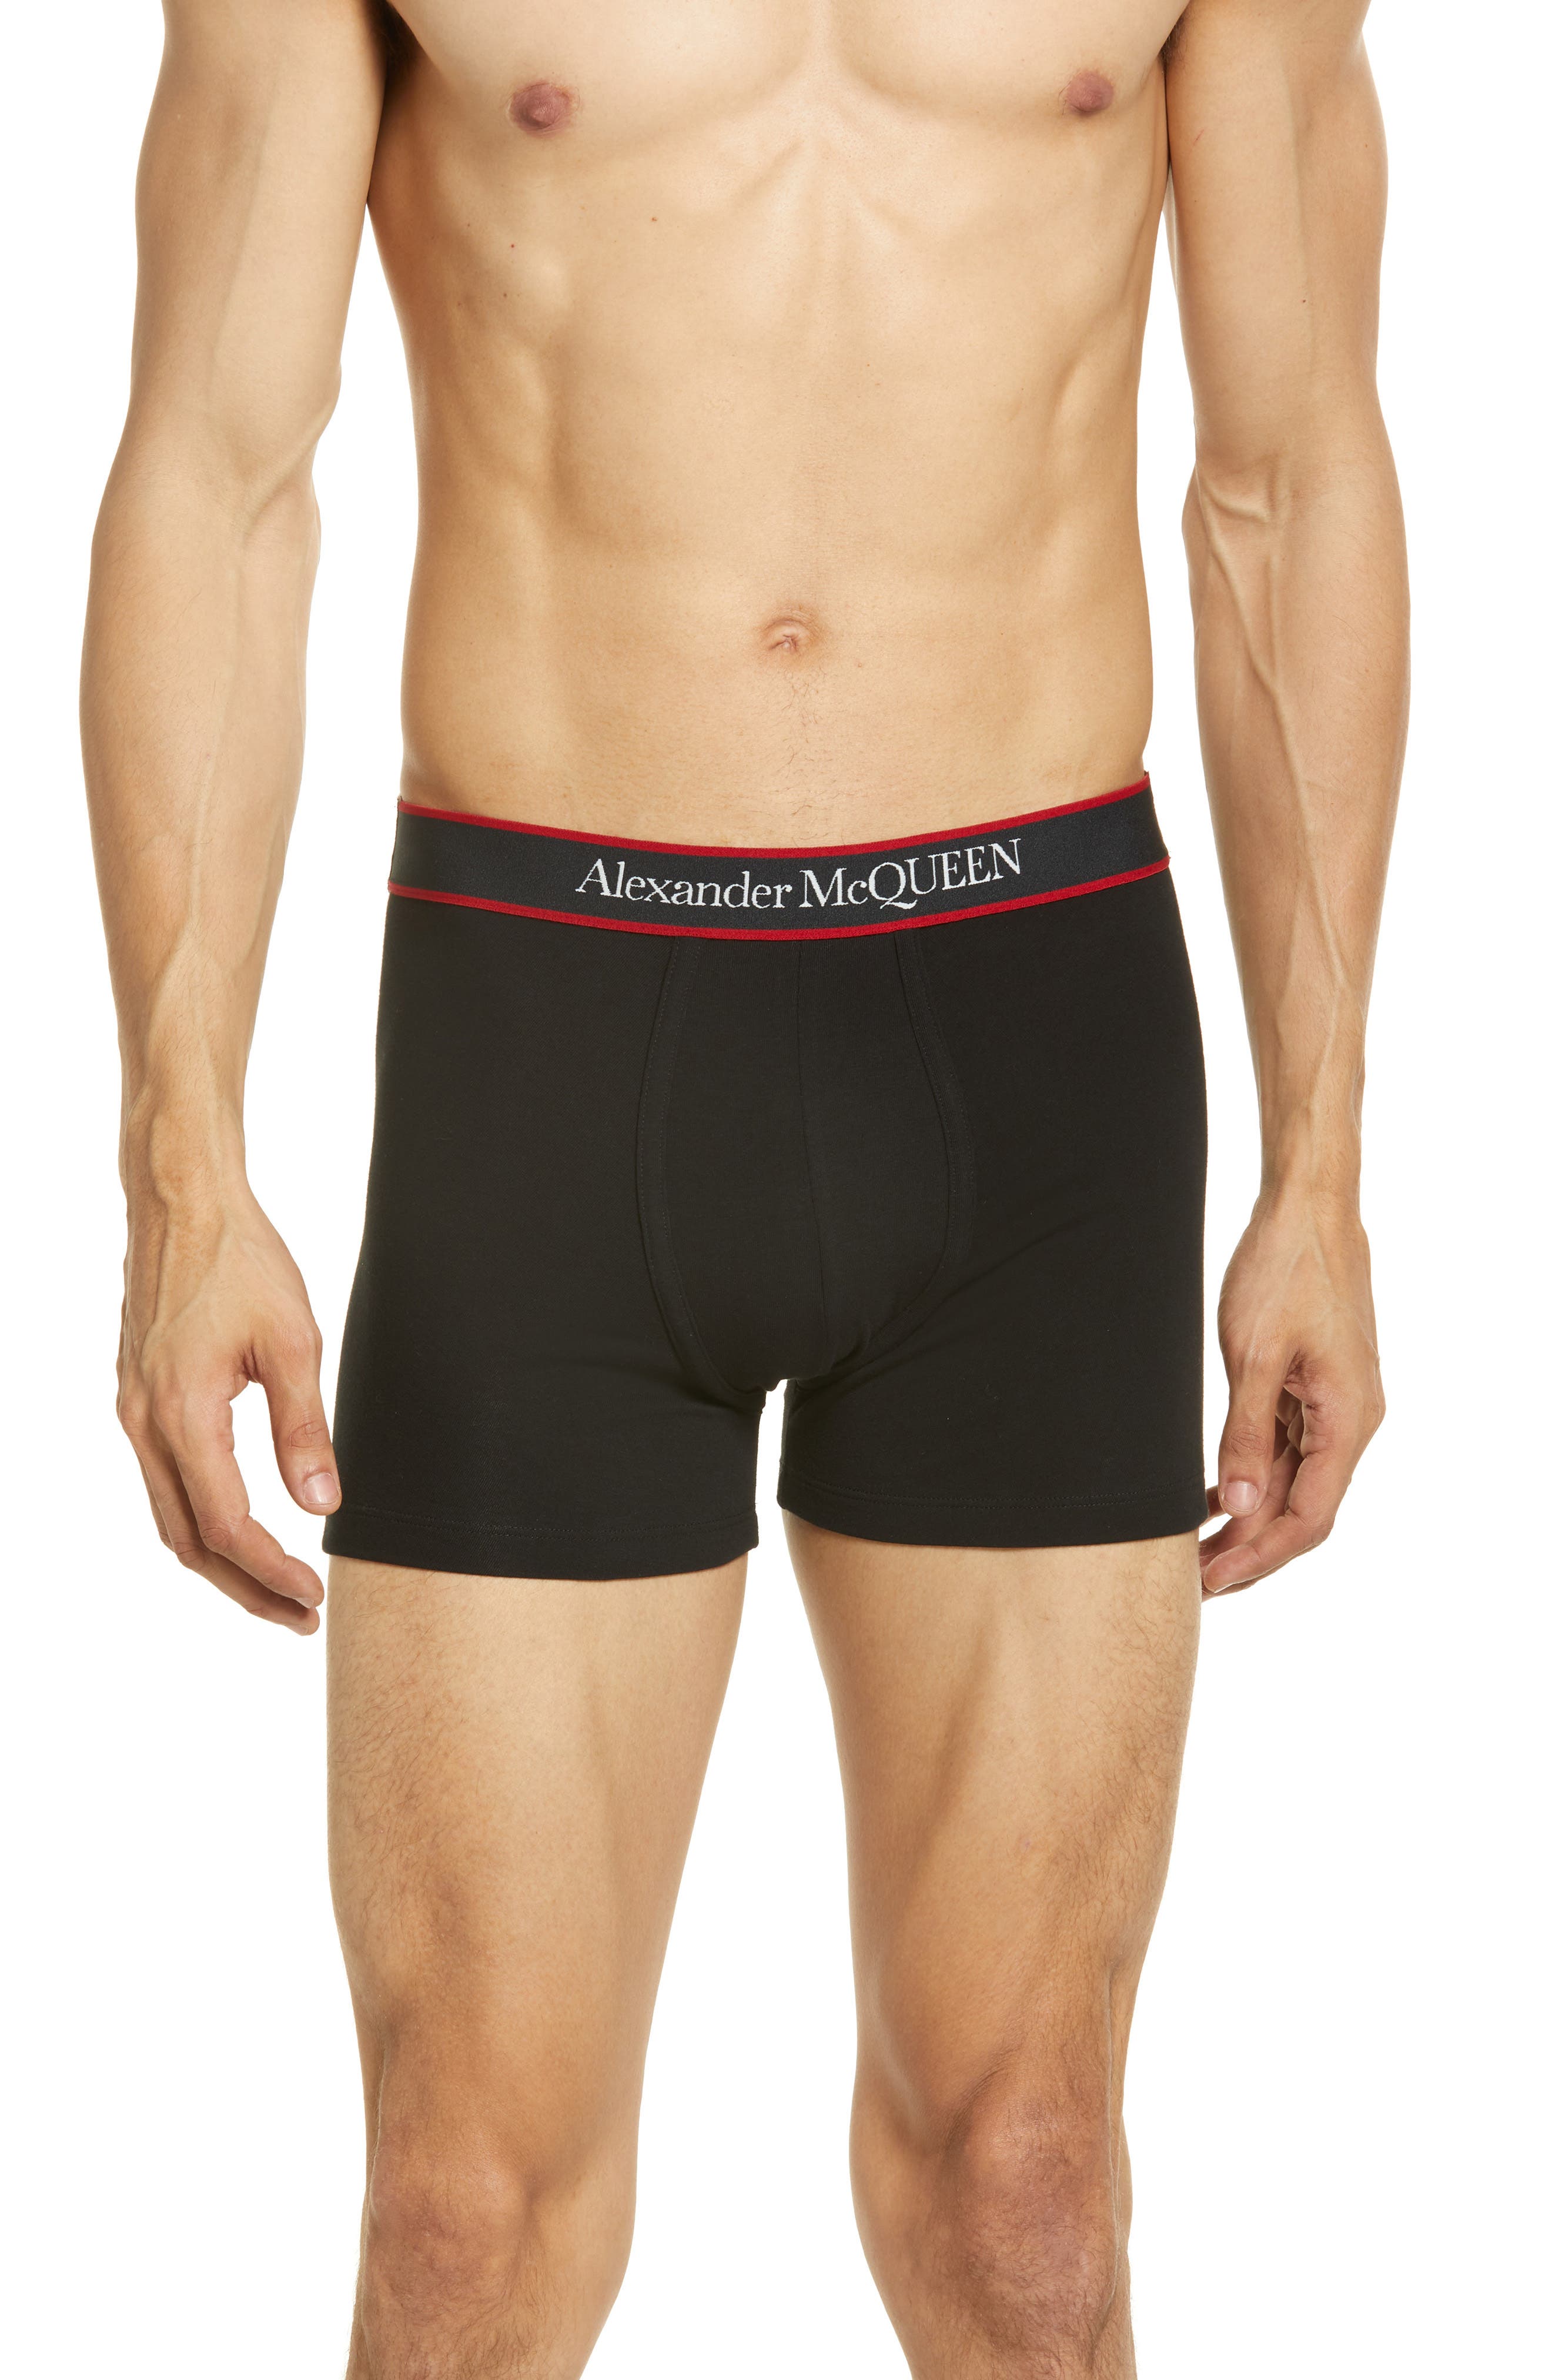 Alexander McQueen White Selvedge Slip for Men Mens Clothing Underwear Boxers briefs 